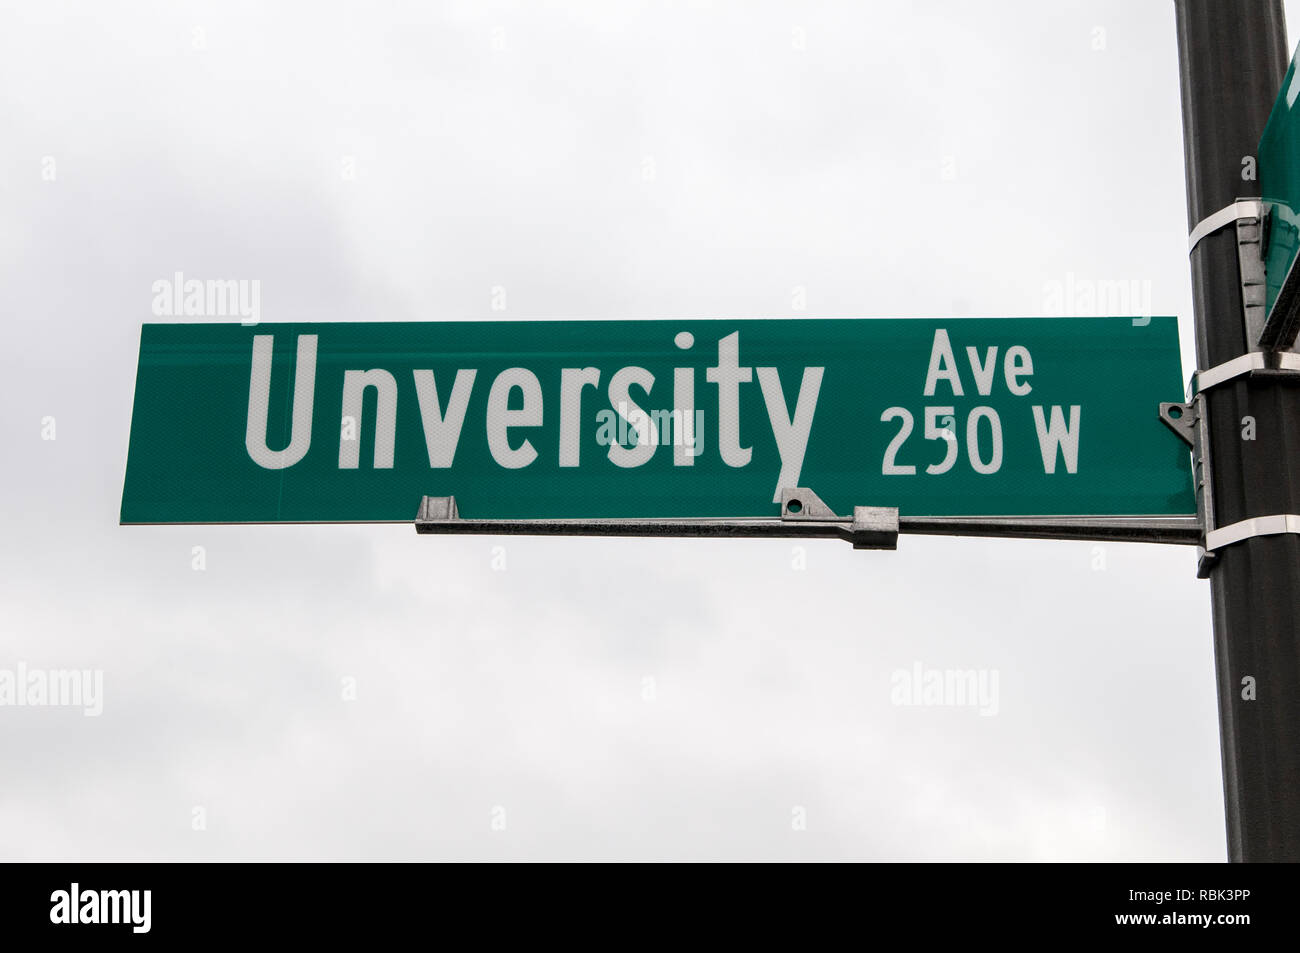 St. Paul, Minnesota. Misspelled street sign. City of St. Paul forgot to put the i in University. Stock Photo